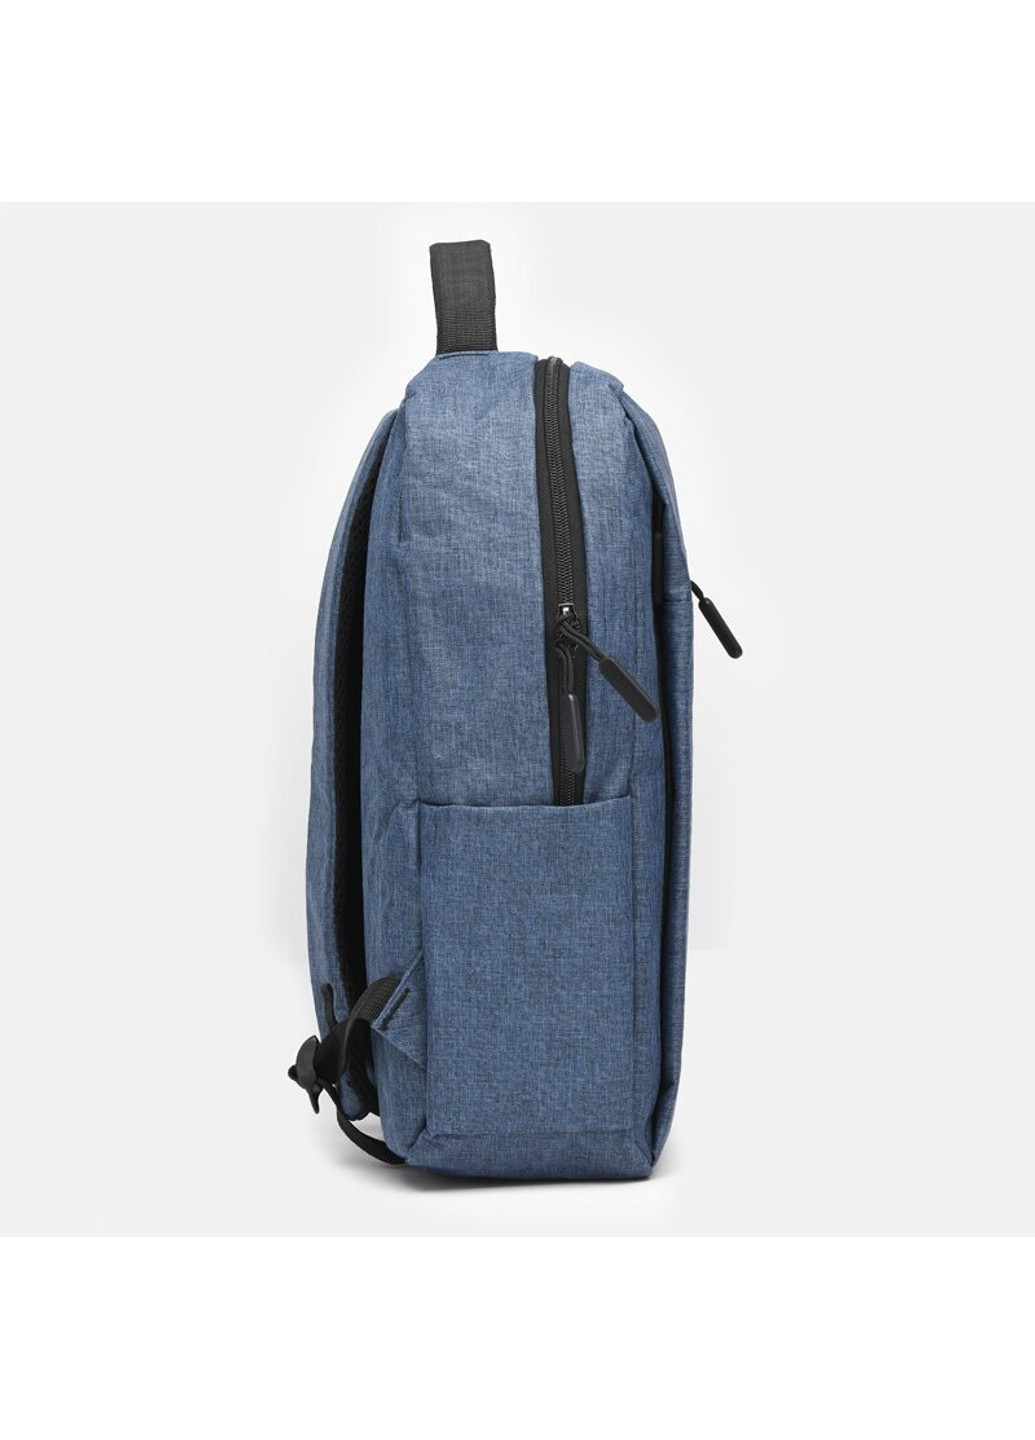 Мужской рюкзак C1638-blue Monsen (266143814)